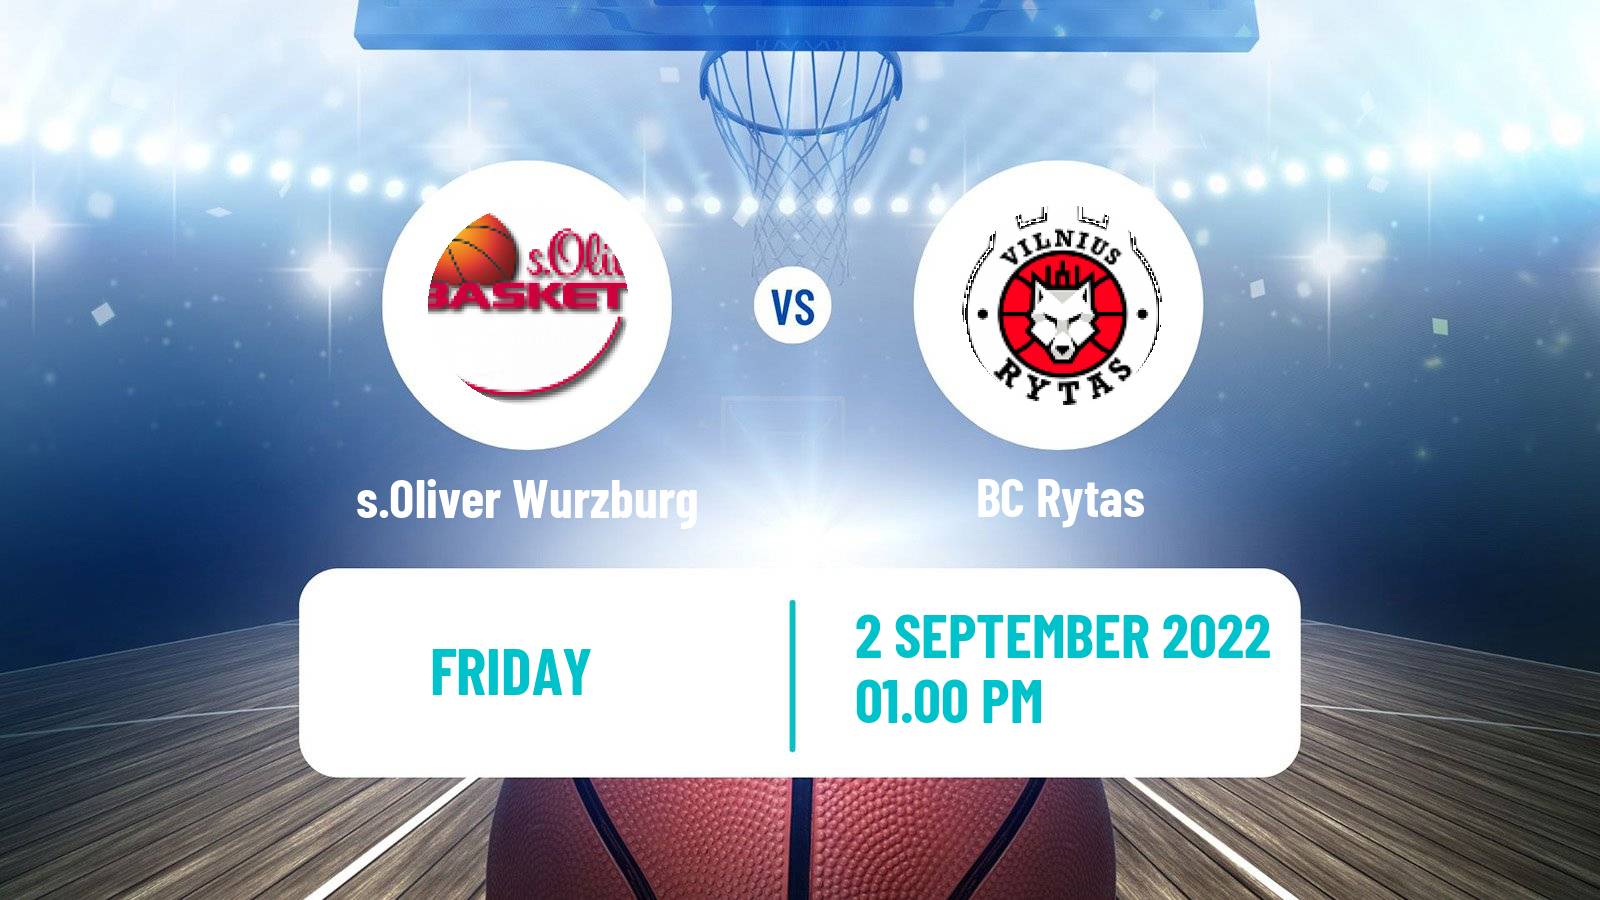 Basketball Club Friendly Basketball s.Oliver Wurzburg - Rytas